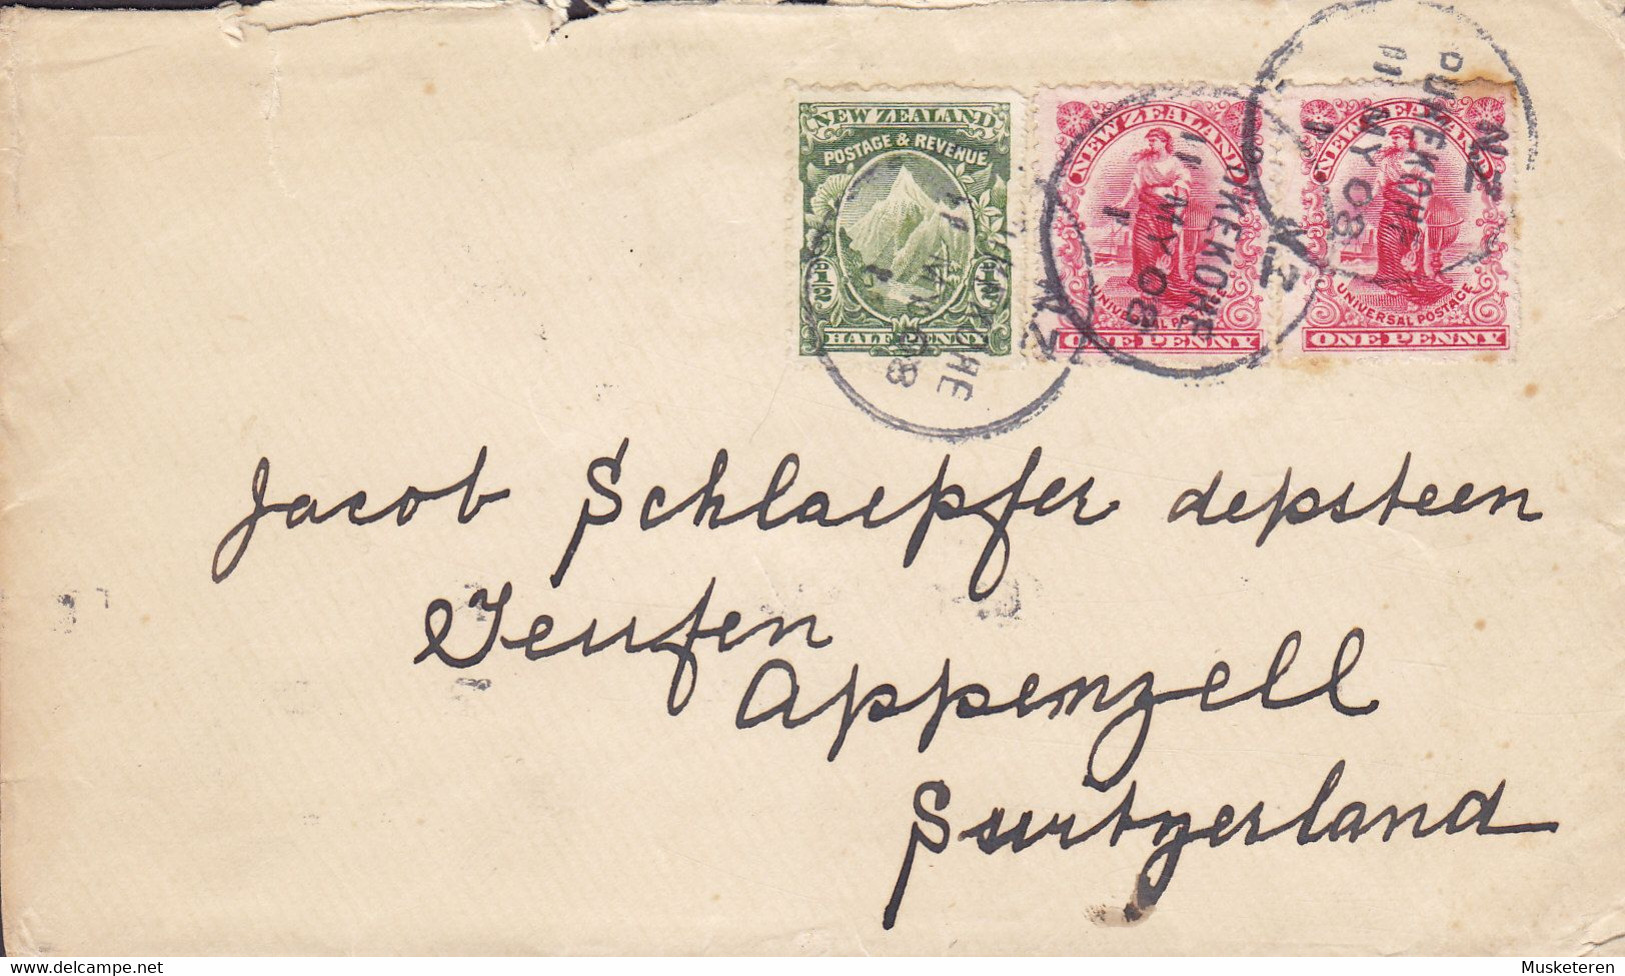 New Zealand PUKEKOHE 1908 'Petite' Cover Brief Via AUCKLAND & TEUFEN (Arr. Cds.) To APPENZELL Switzerland (2 Scans) - Lettres & Documents